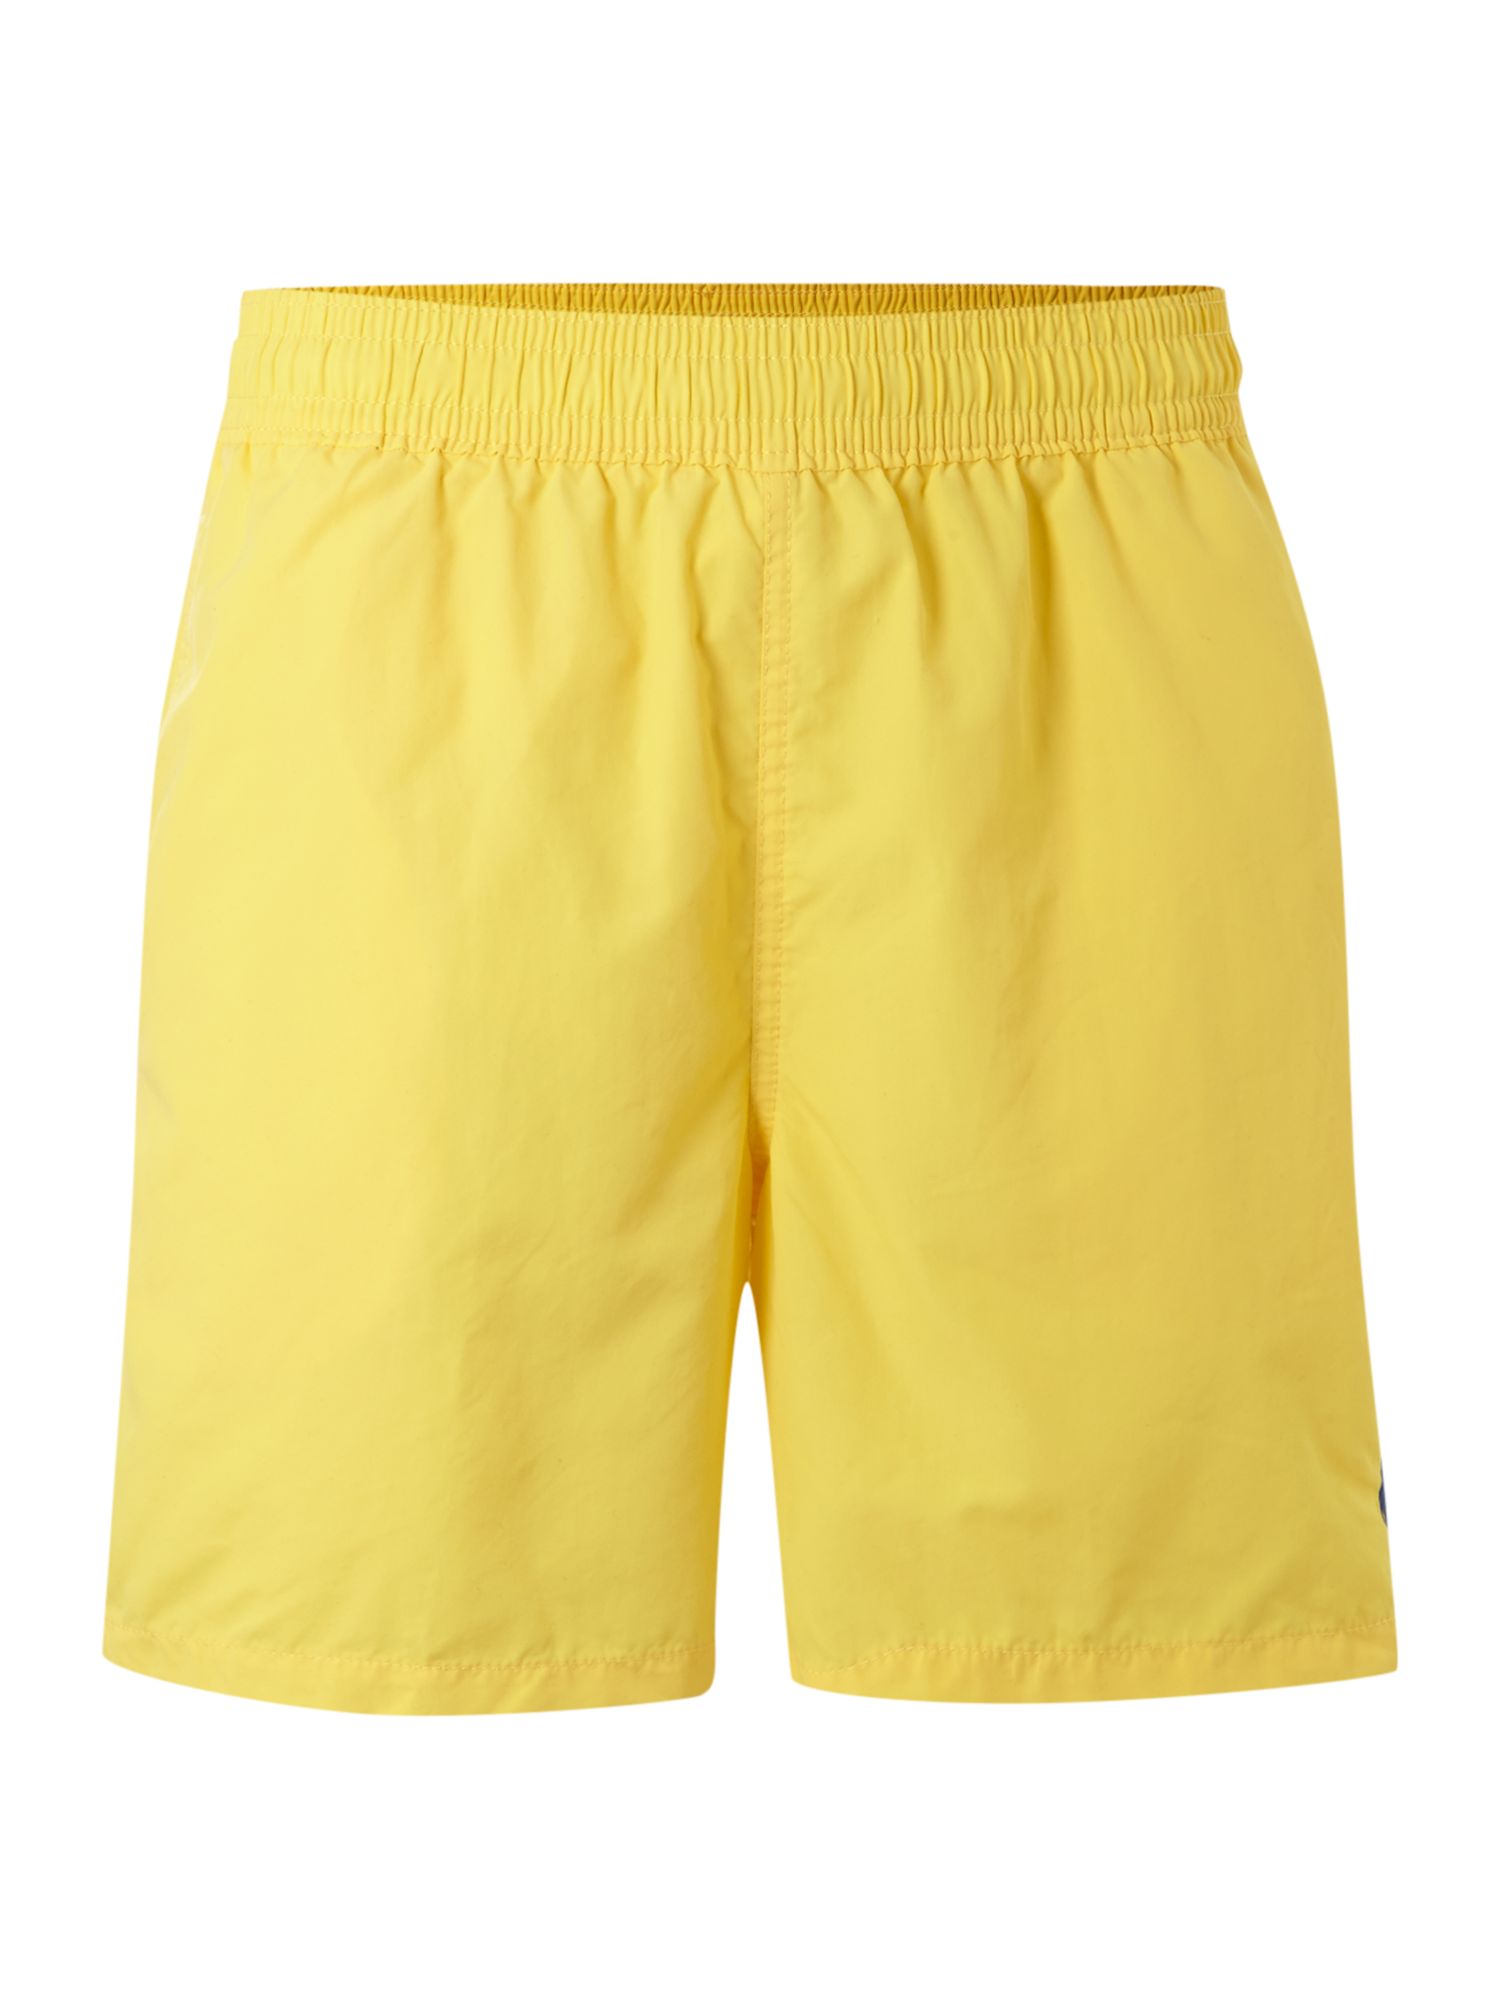 Polo ralph lauren Classic Swim Shorts in Yellow for Men (Sunshine ...